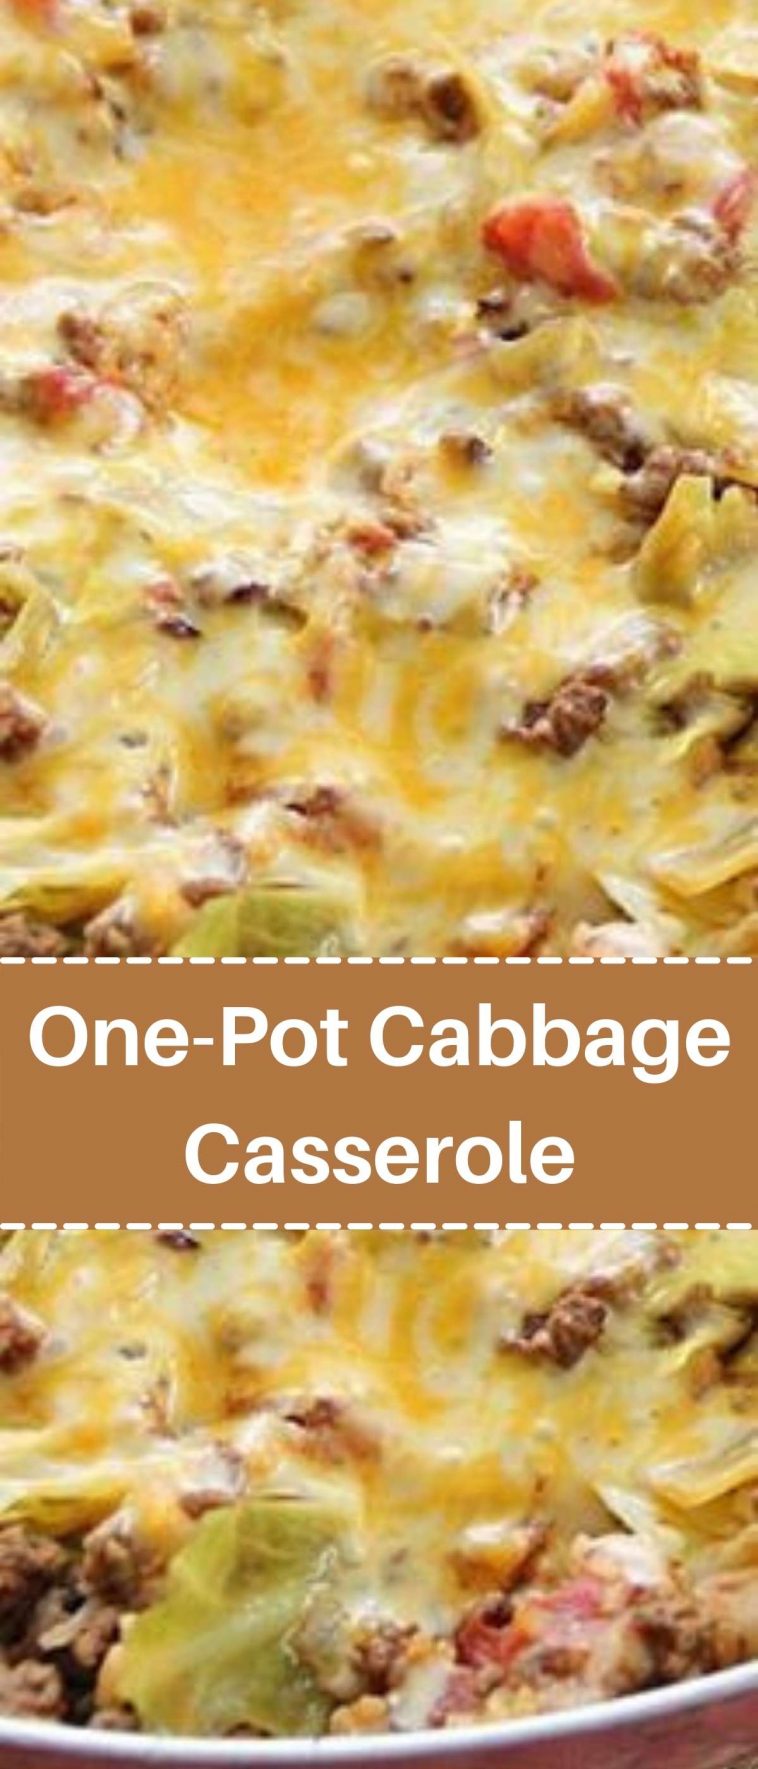 One-Pot Cabbage Casserole